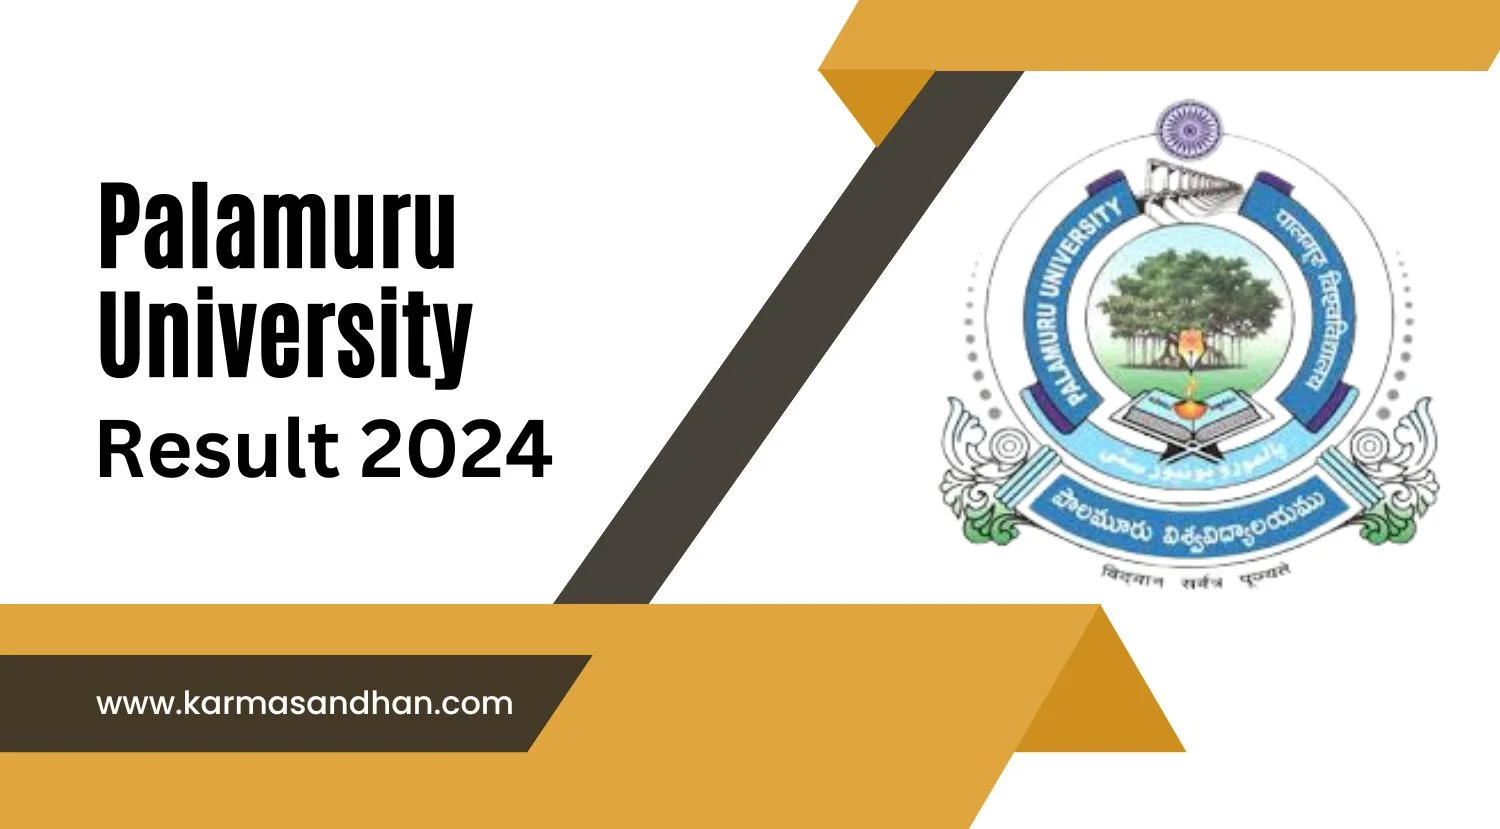 Palamuru University Result 2024